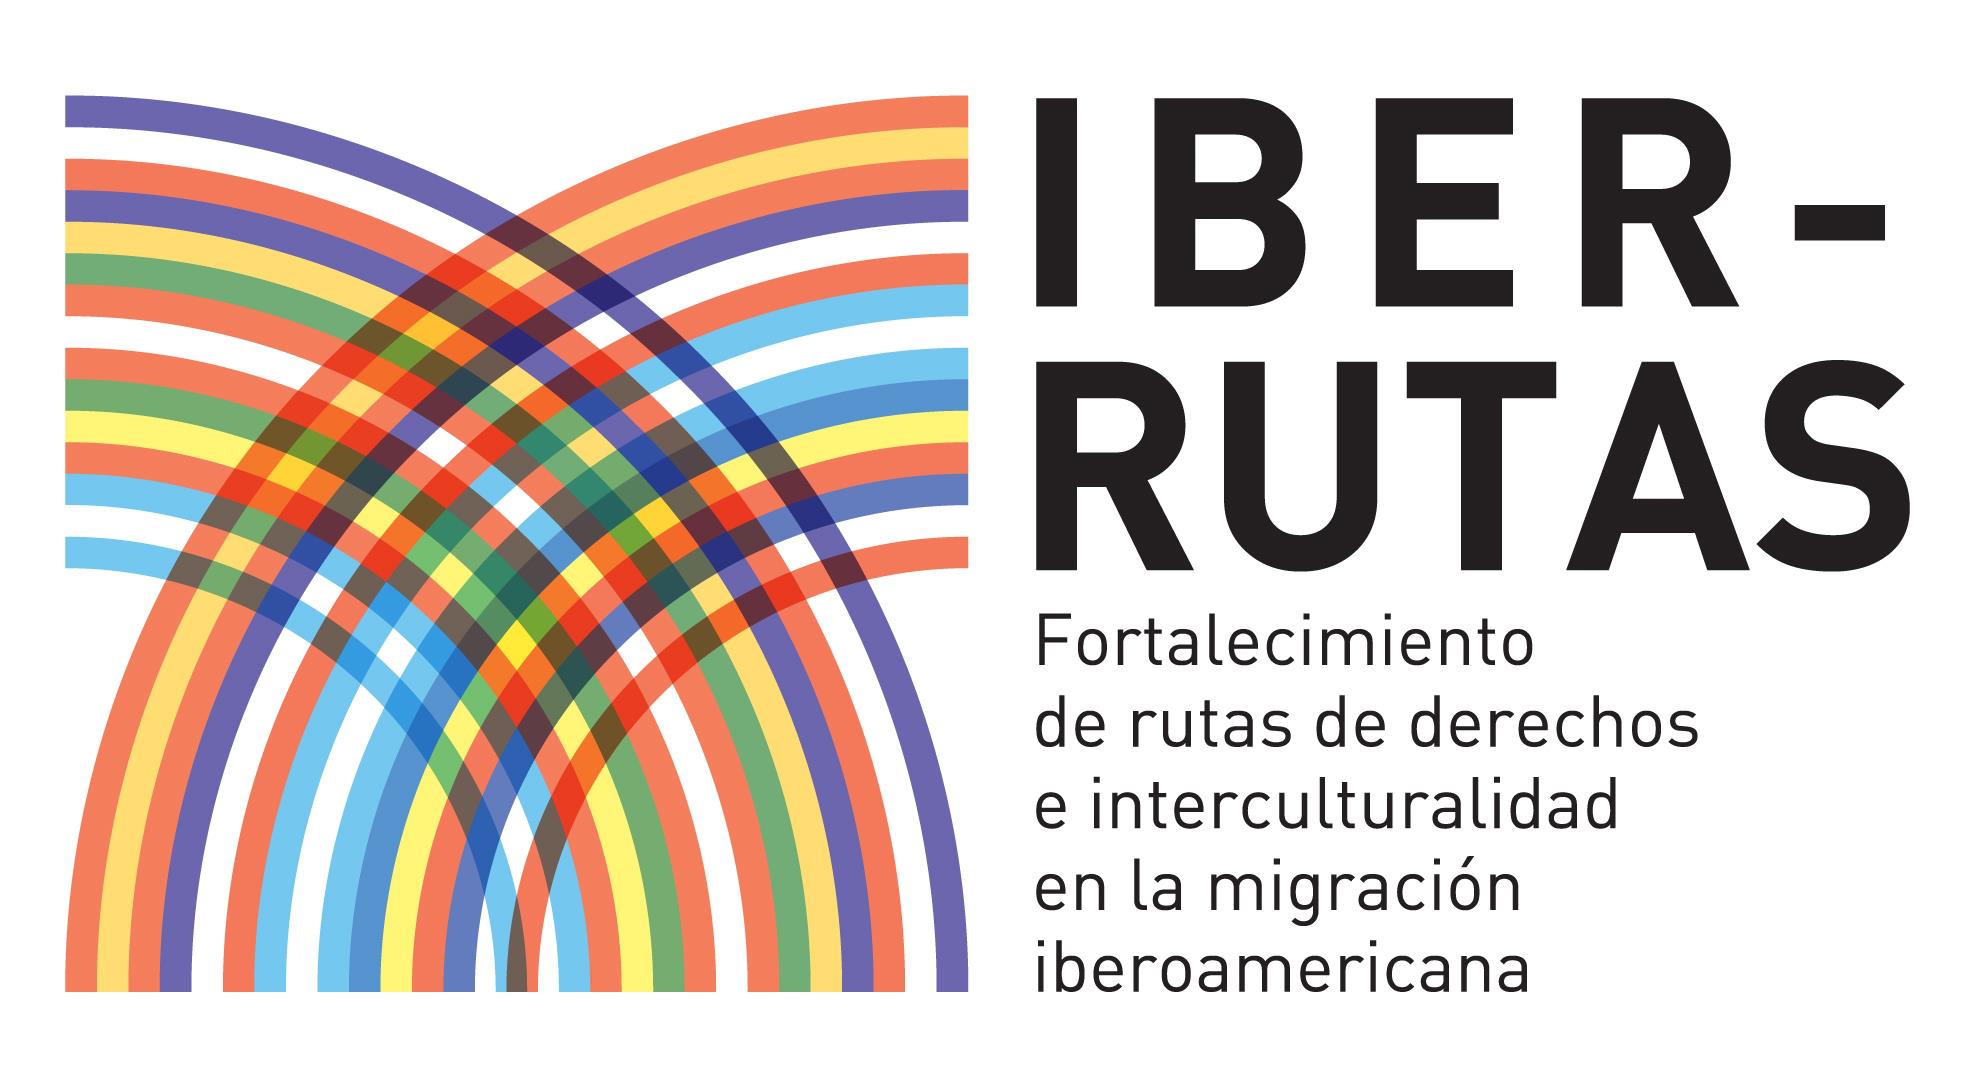 Miradas de Iberoamérica y Maleta Abierta, convocatorias abiertas de IBERRUTAS imagen